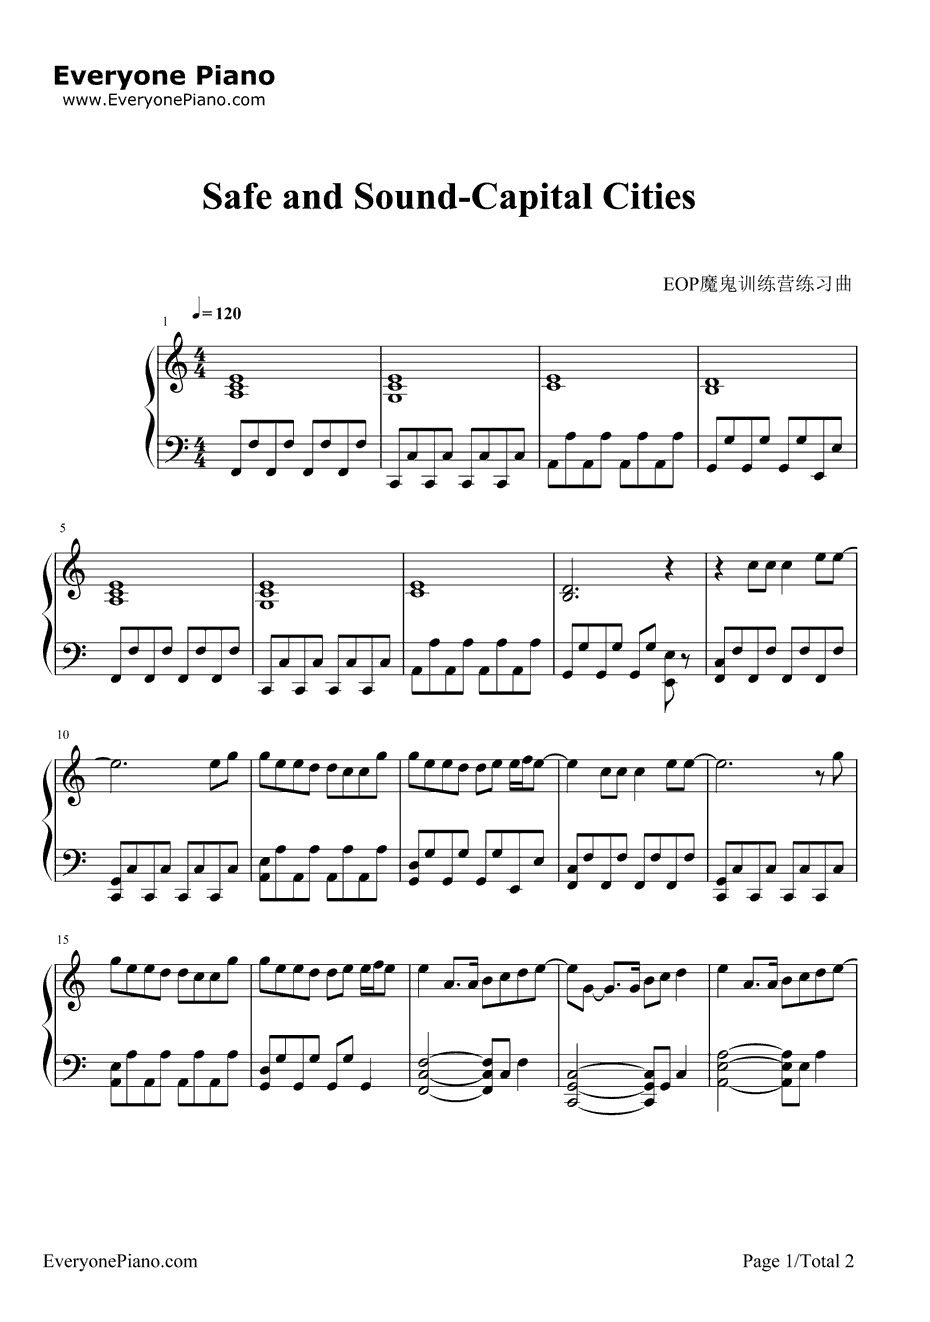 SafeandSound钢琴谱-CapitalCities1